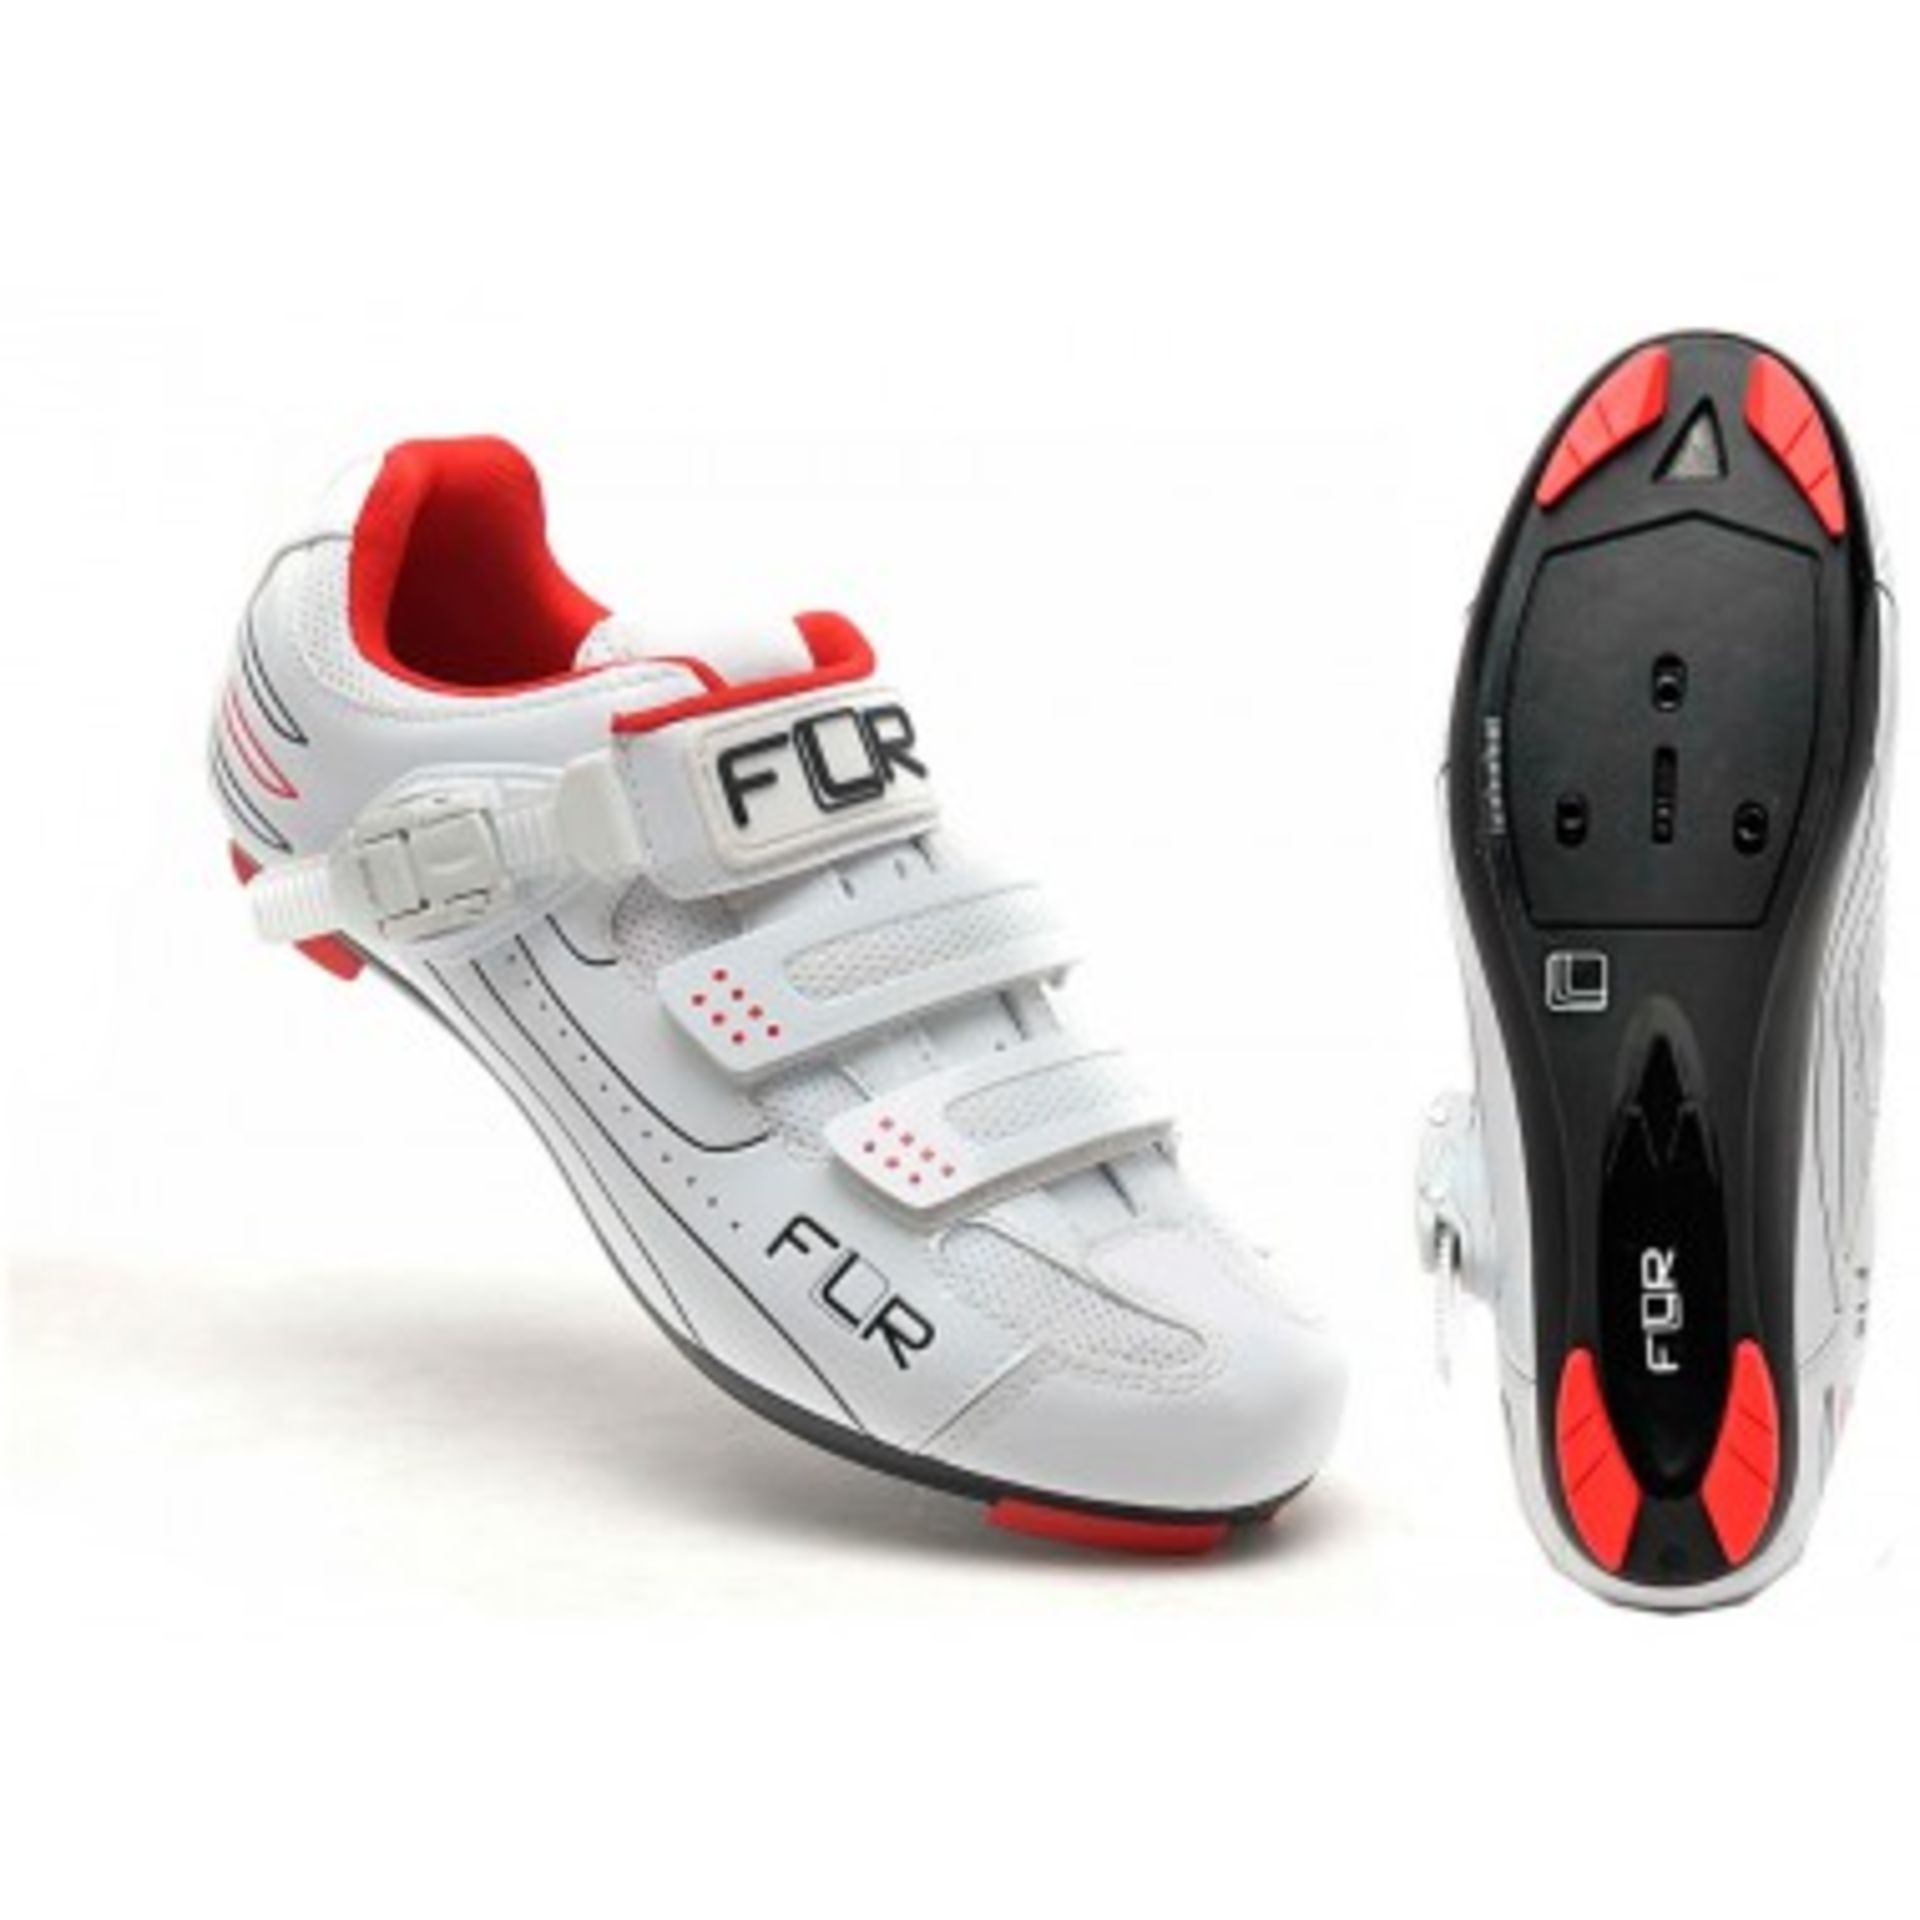 FLR F-15 II White Cycling Shoes UK8 RRP £79.99